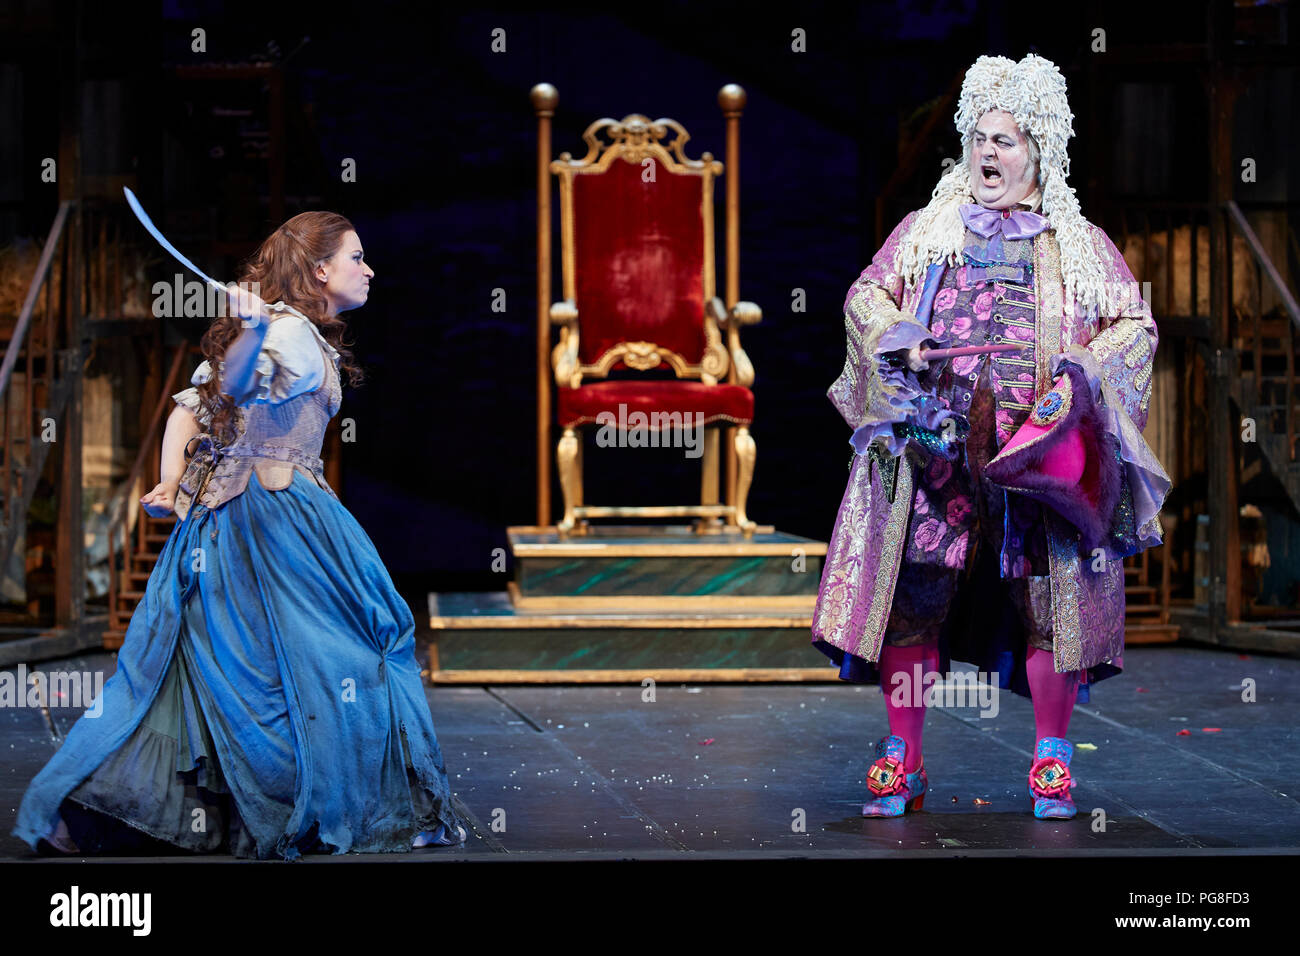 Edinburgh, UK. 23rd August 2018.Preview of Rossini's opera LA CENERENTOLA at Edinburgh International Festival. Credit: Andrew Eaton/Alamy Live News. Stock Photo